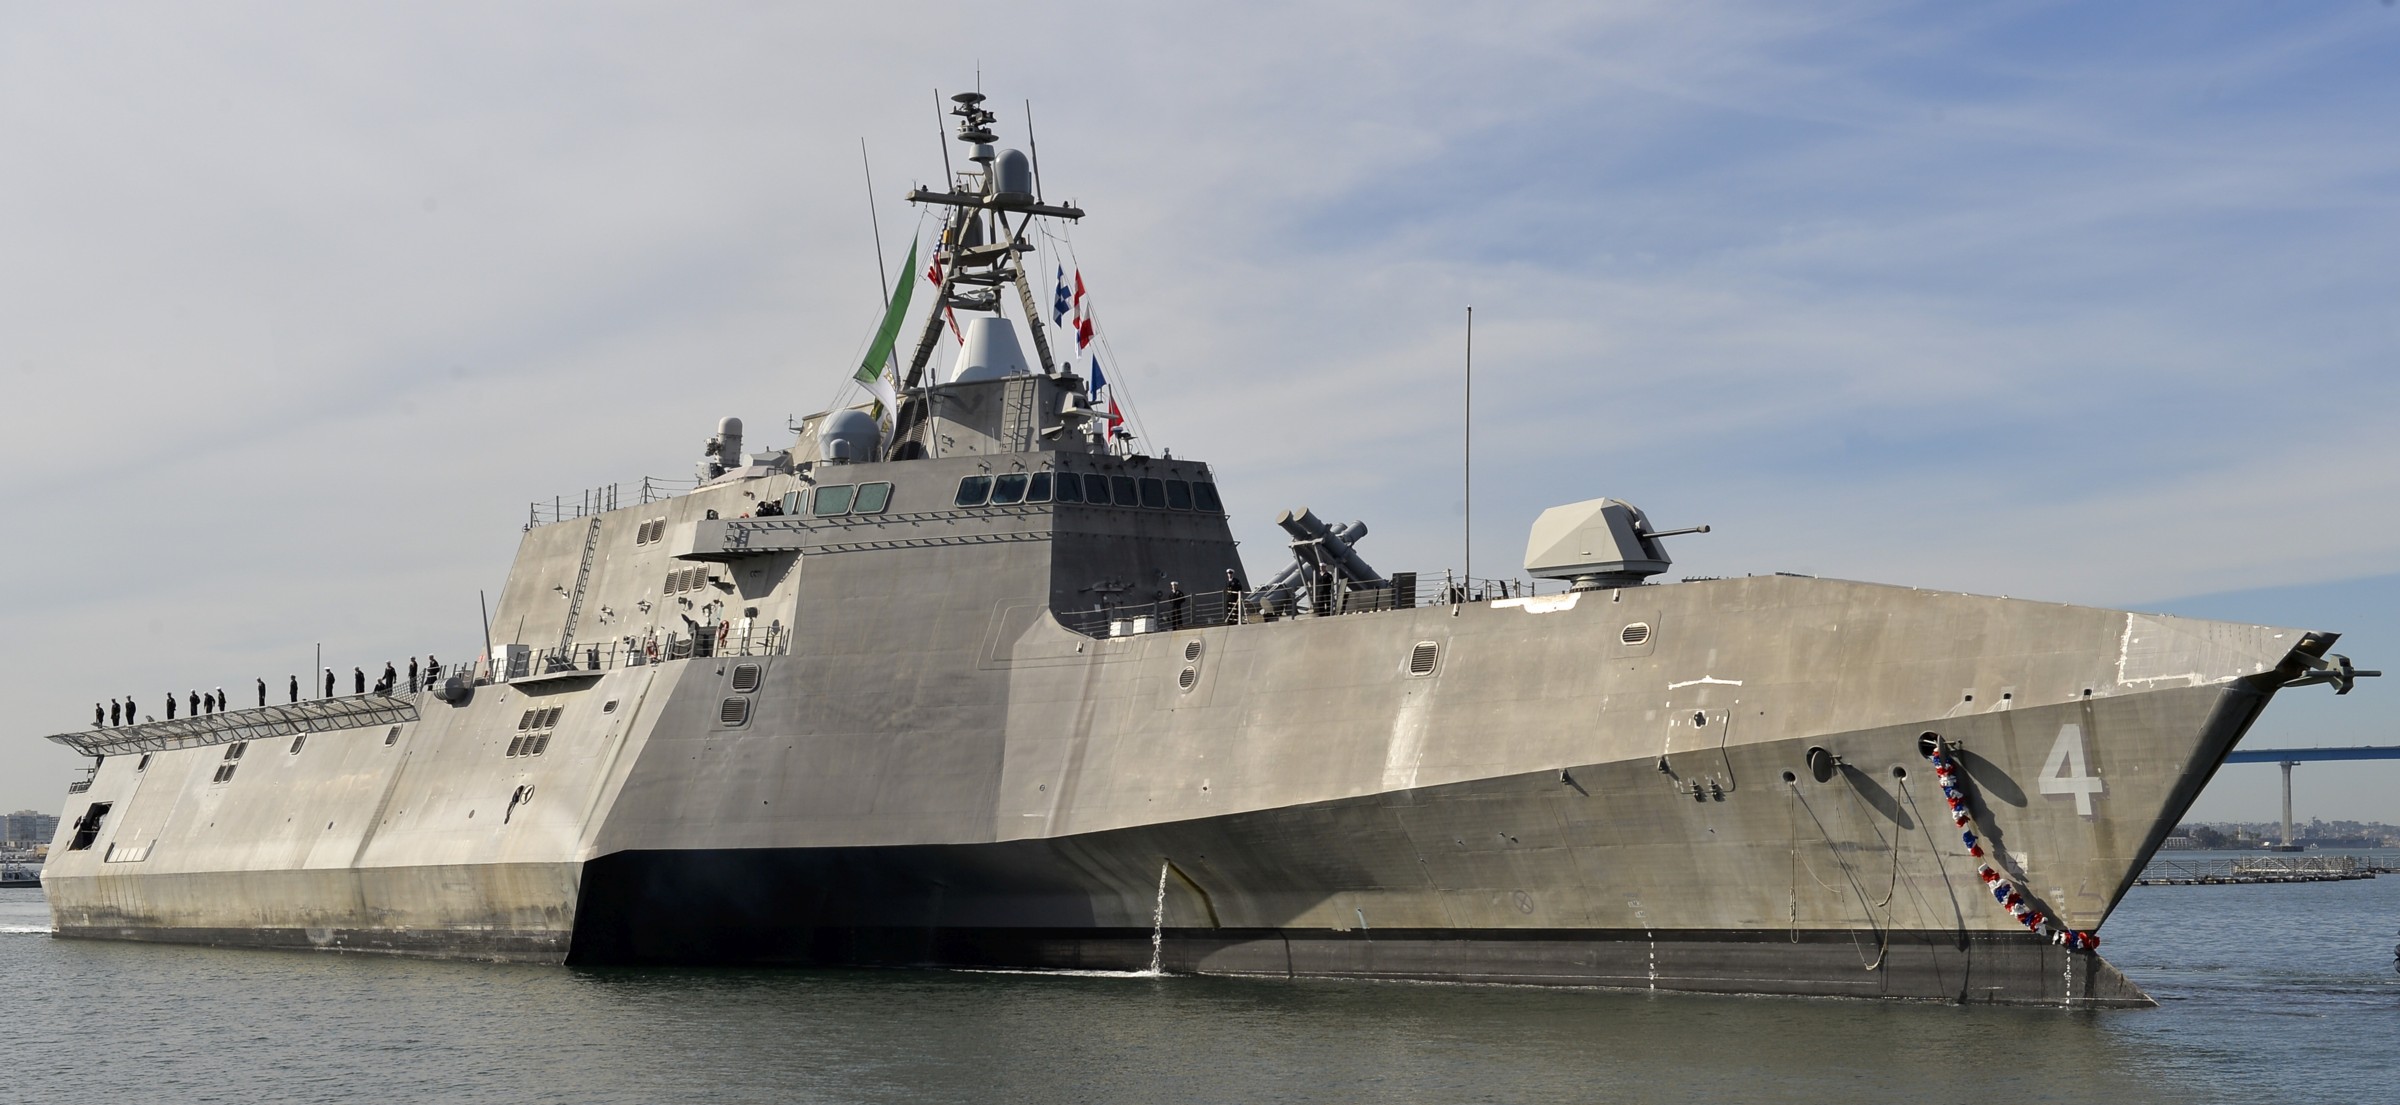 lcs-4 uss coronado independence class littoral combat ship us navy 31 san diego homeport